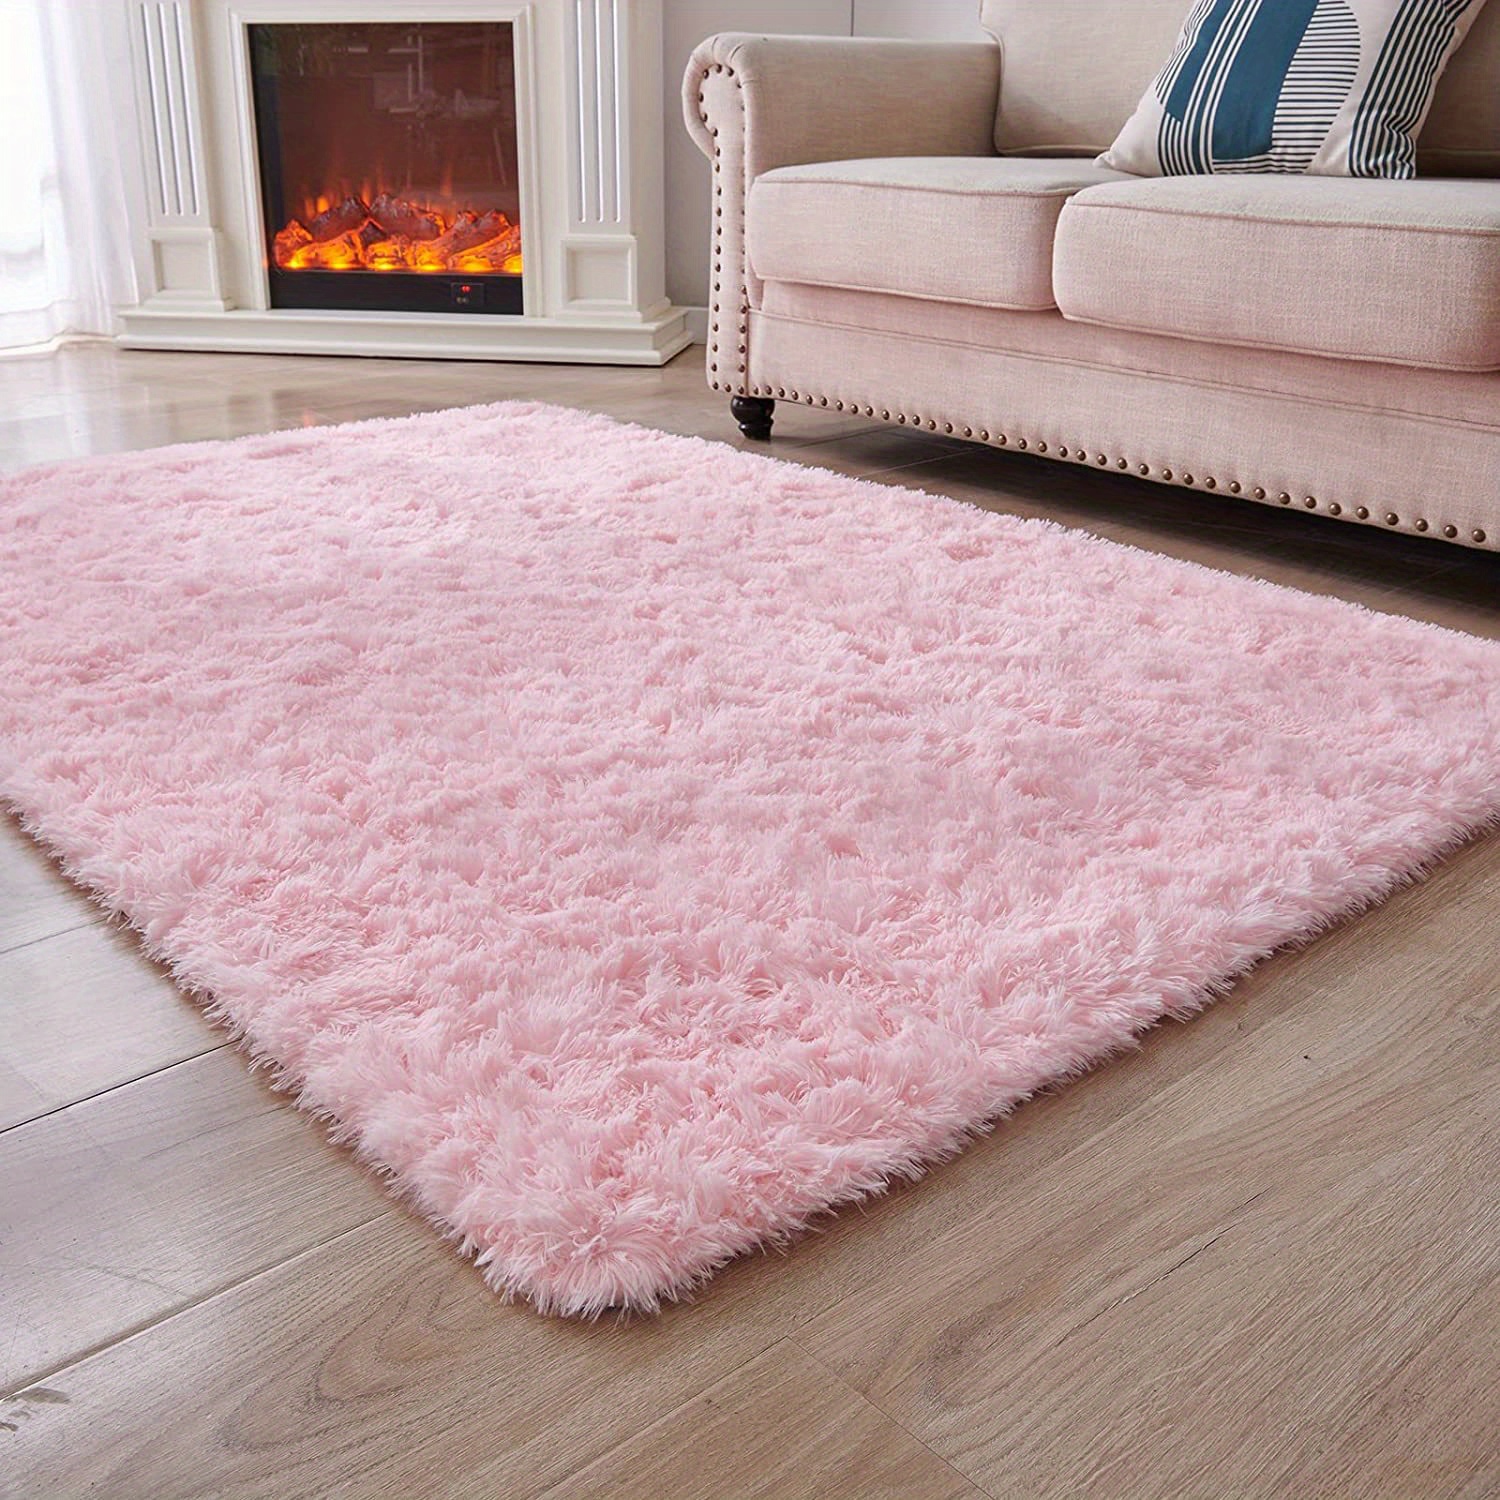 Motley Tie-dye Carpet Soft Fluffy Rug Shaggy Area Rugs Floor Mat Nursery  Rugs for Living Room Bedroom 4 Feet by 5.3 Feet,Pink